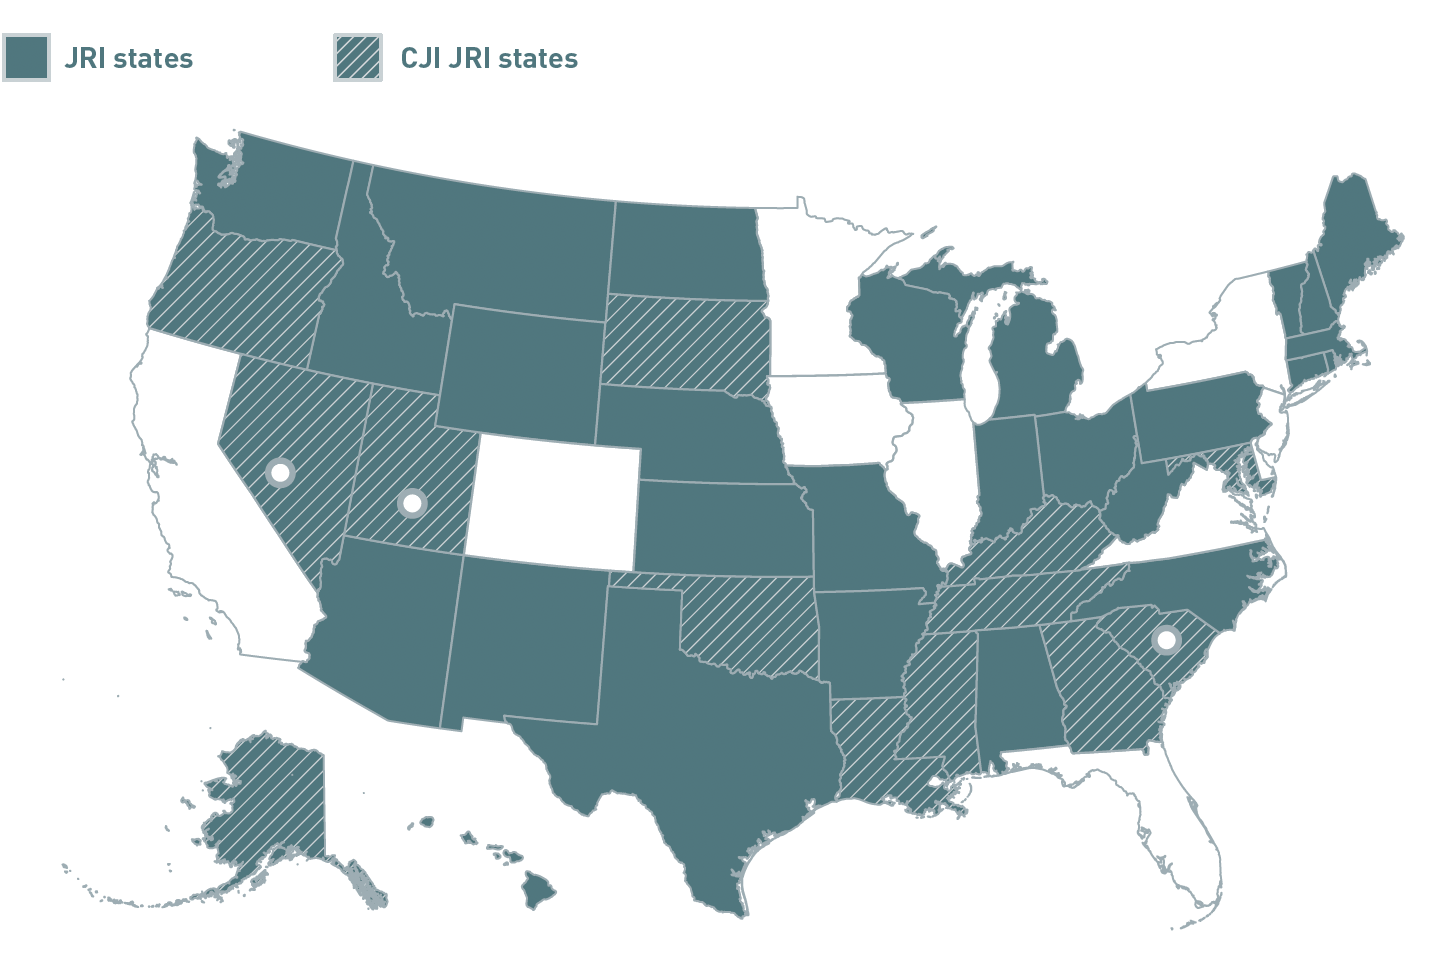 Highlighting JRI states in Nevada, Utah and South Carolina